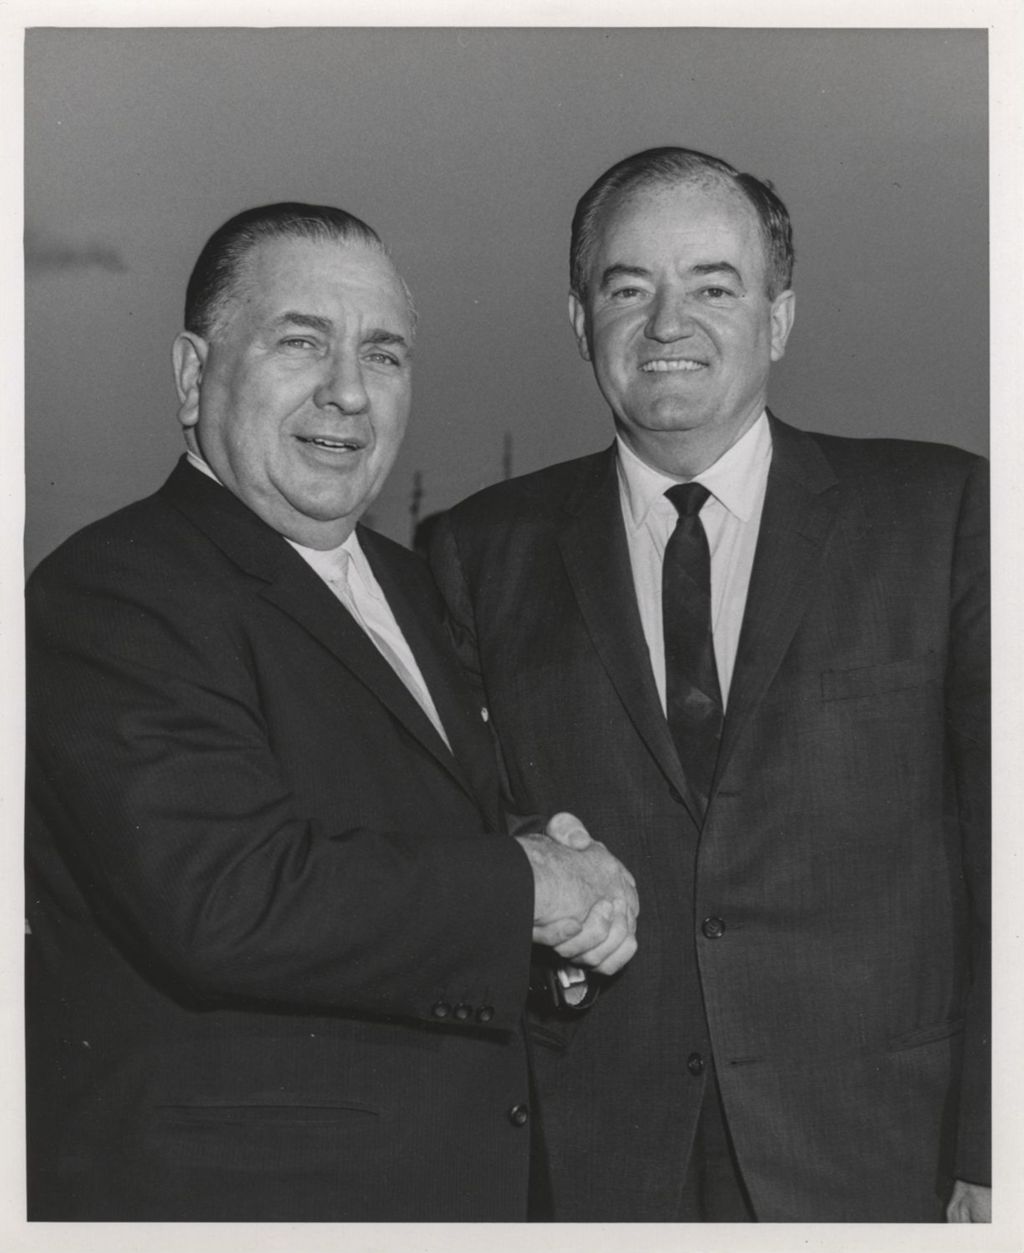 Miniature of Richard J. Daley shaking hands with Hubert Humphrey